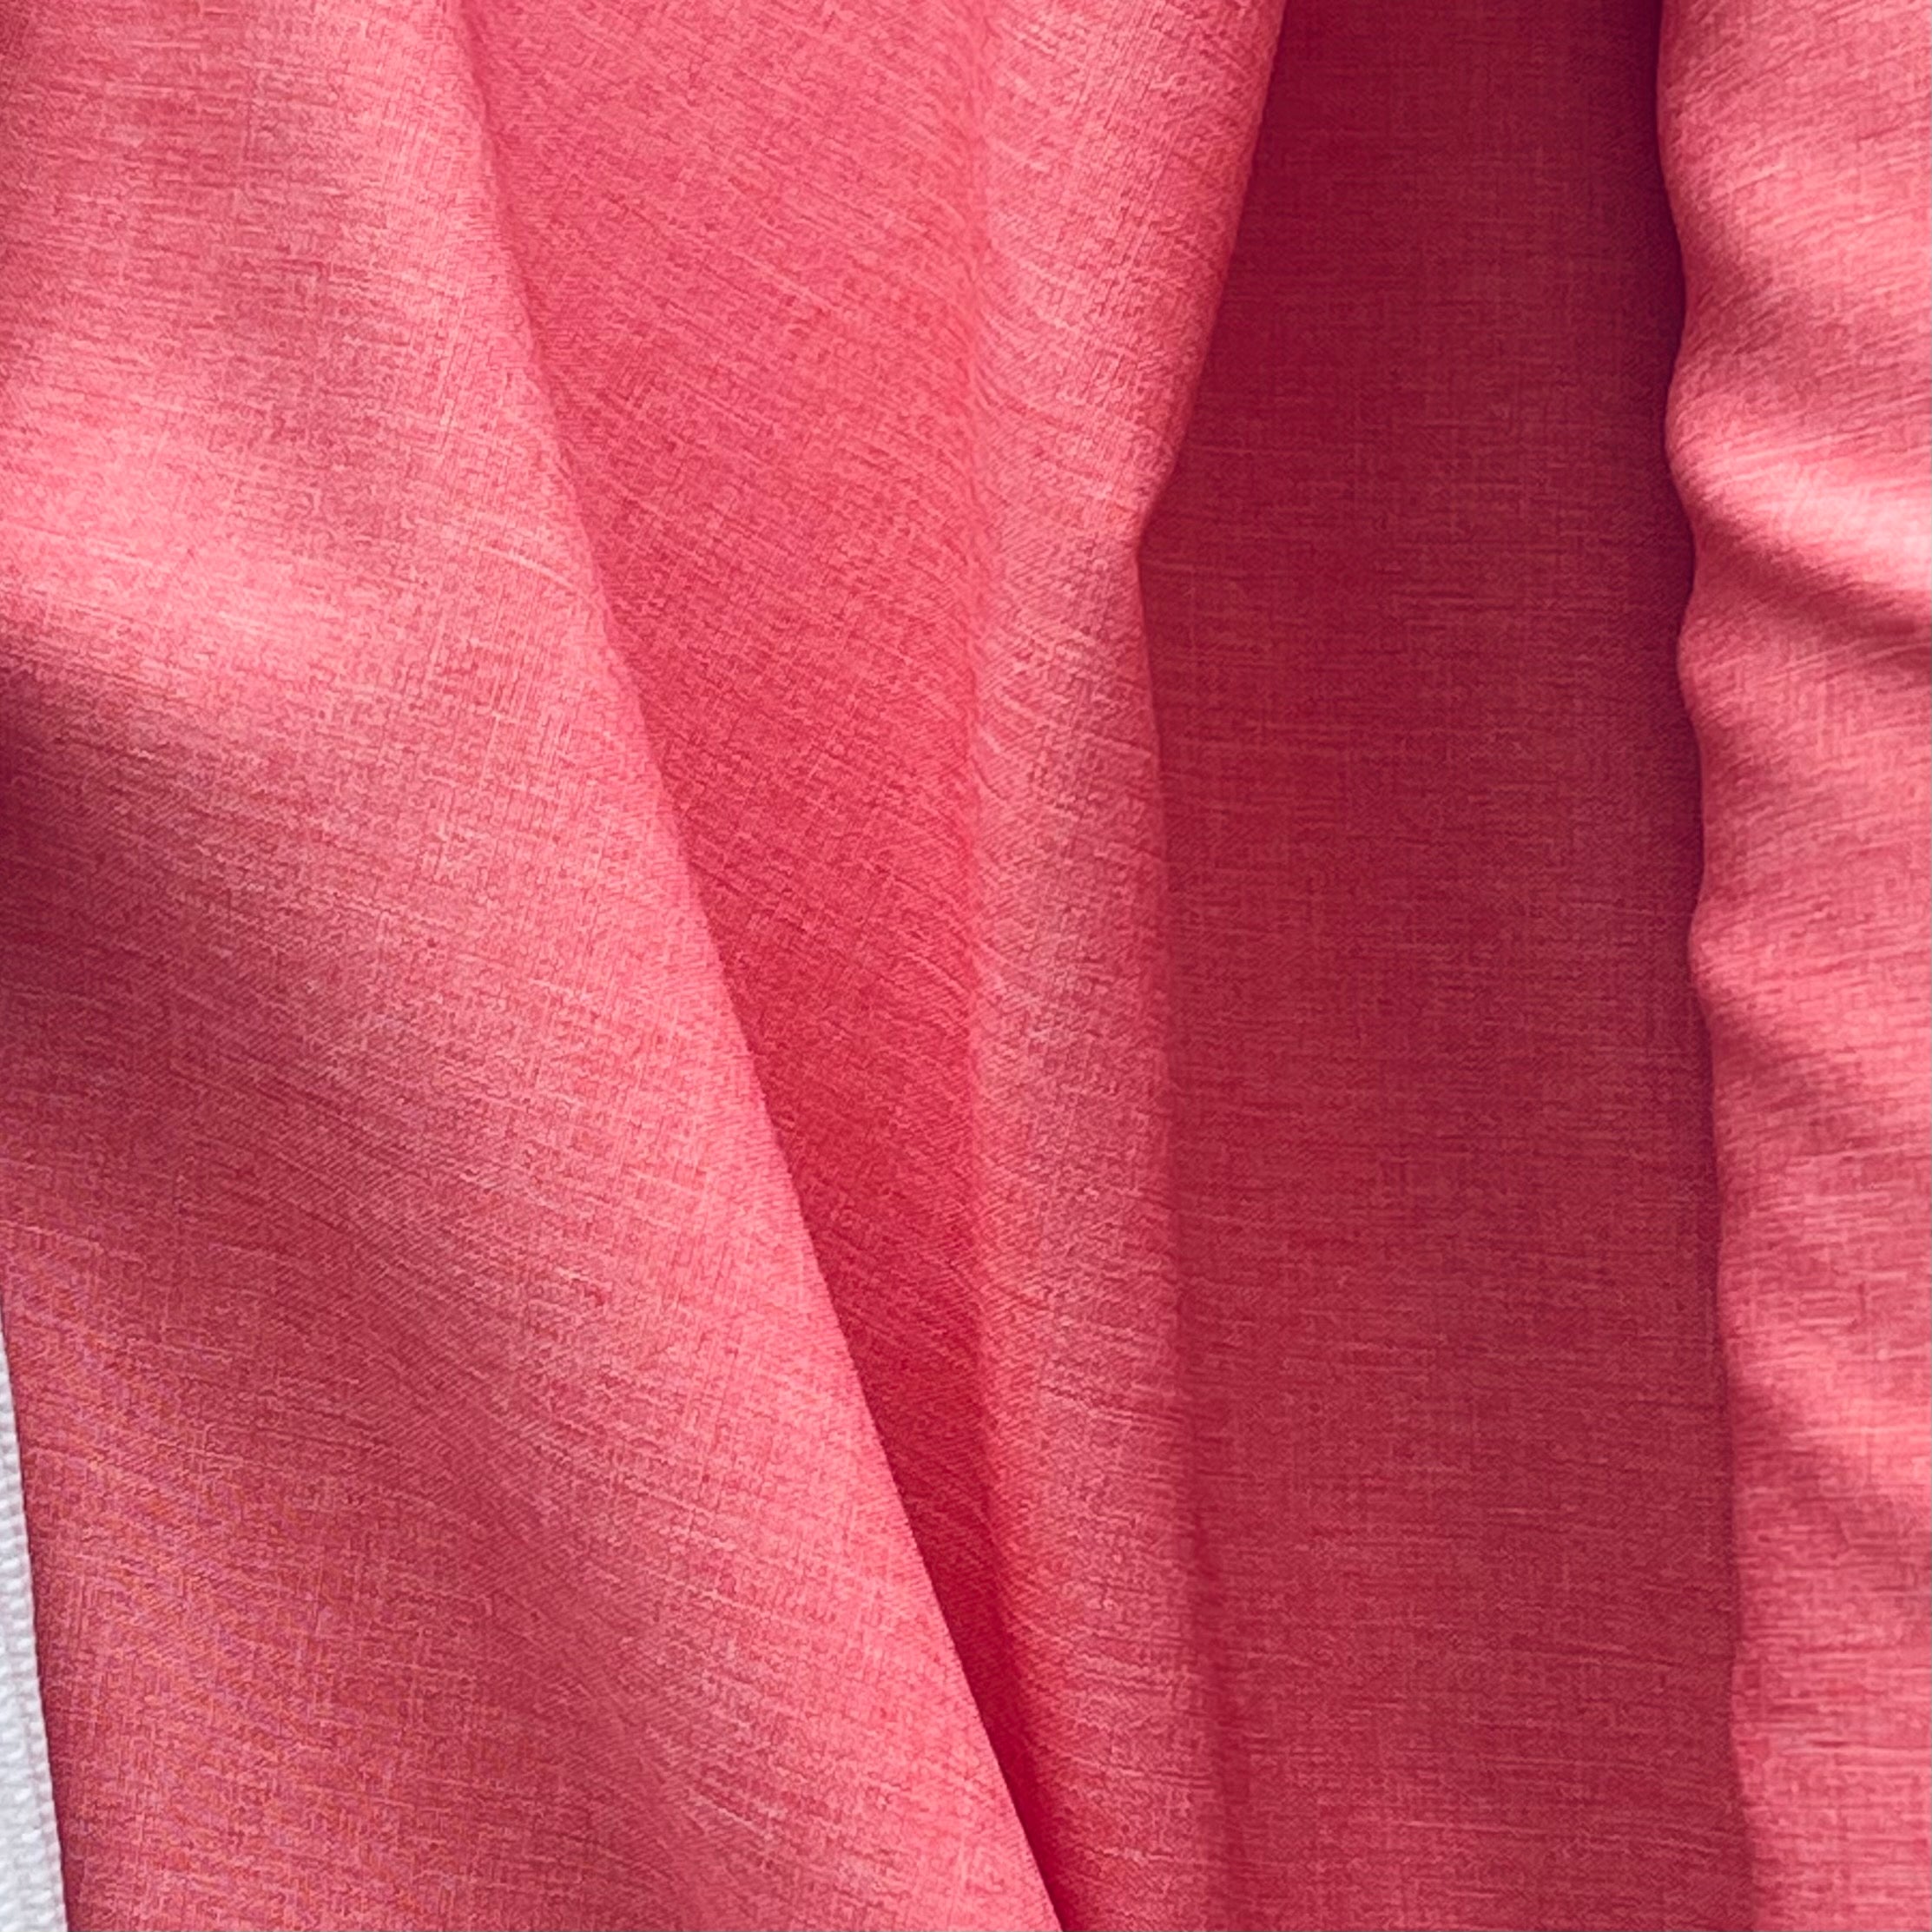 Stretch Woven - Pink Linen Look